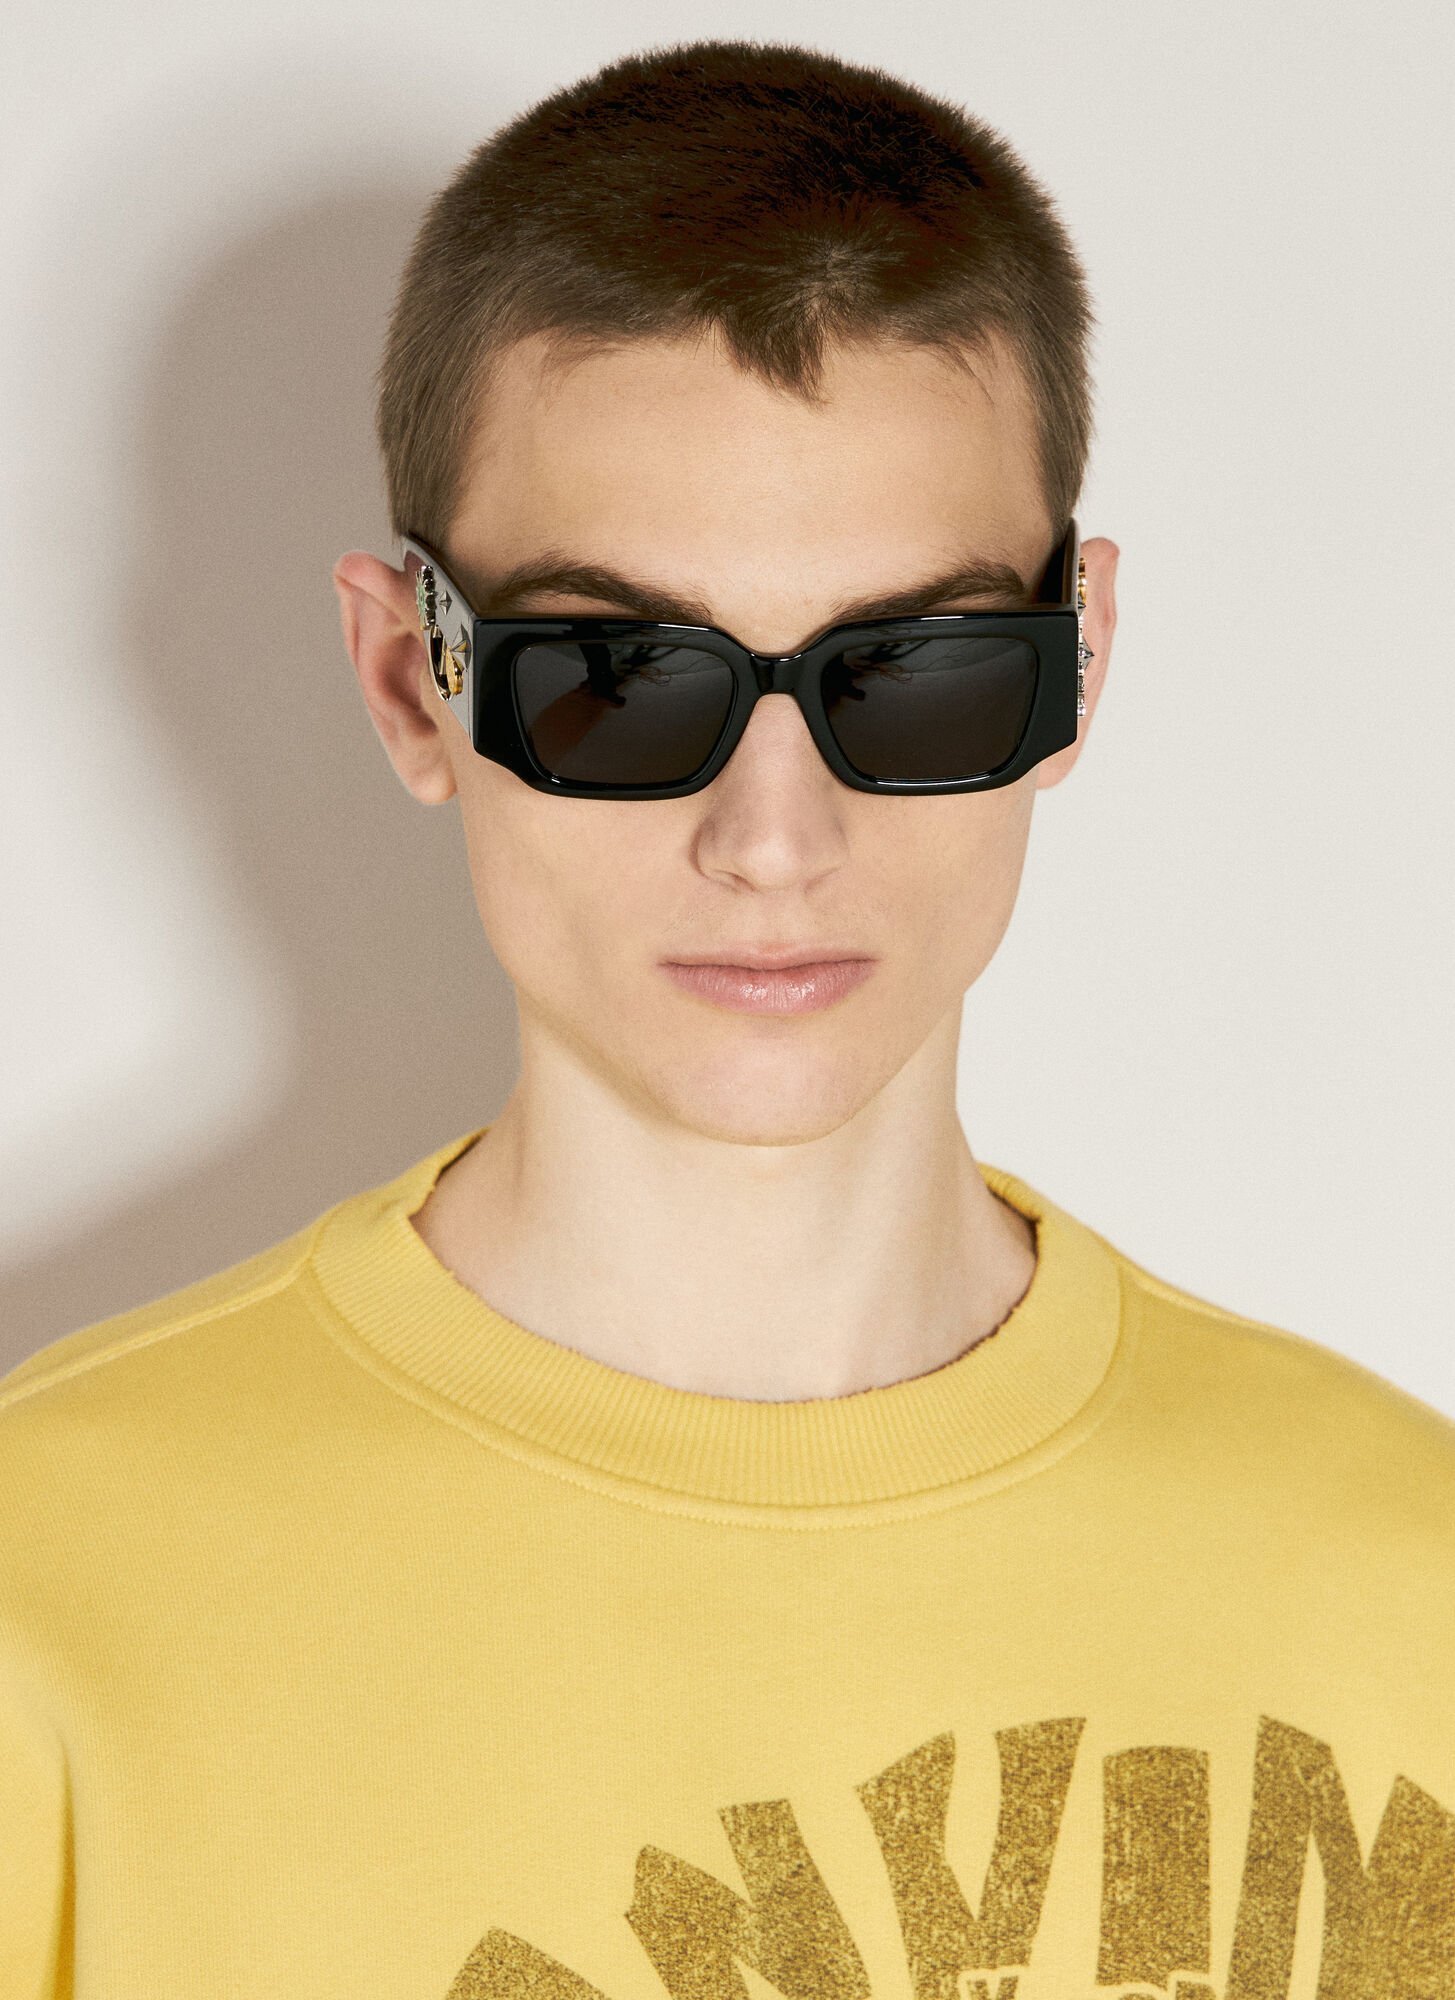 Lanvin X Future Drop 3 Pins Sunglasses In Black